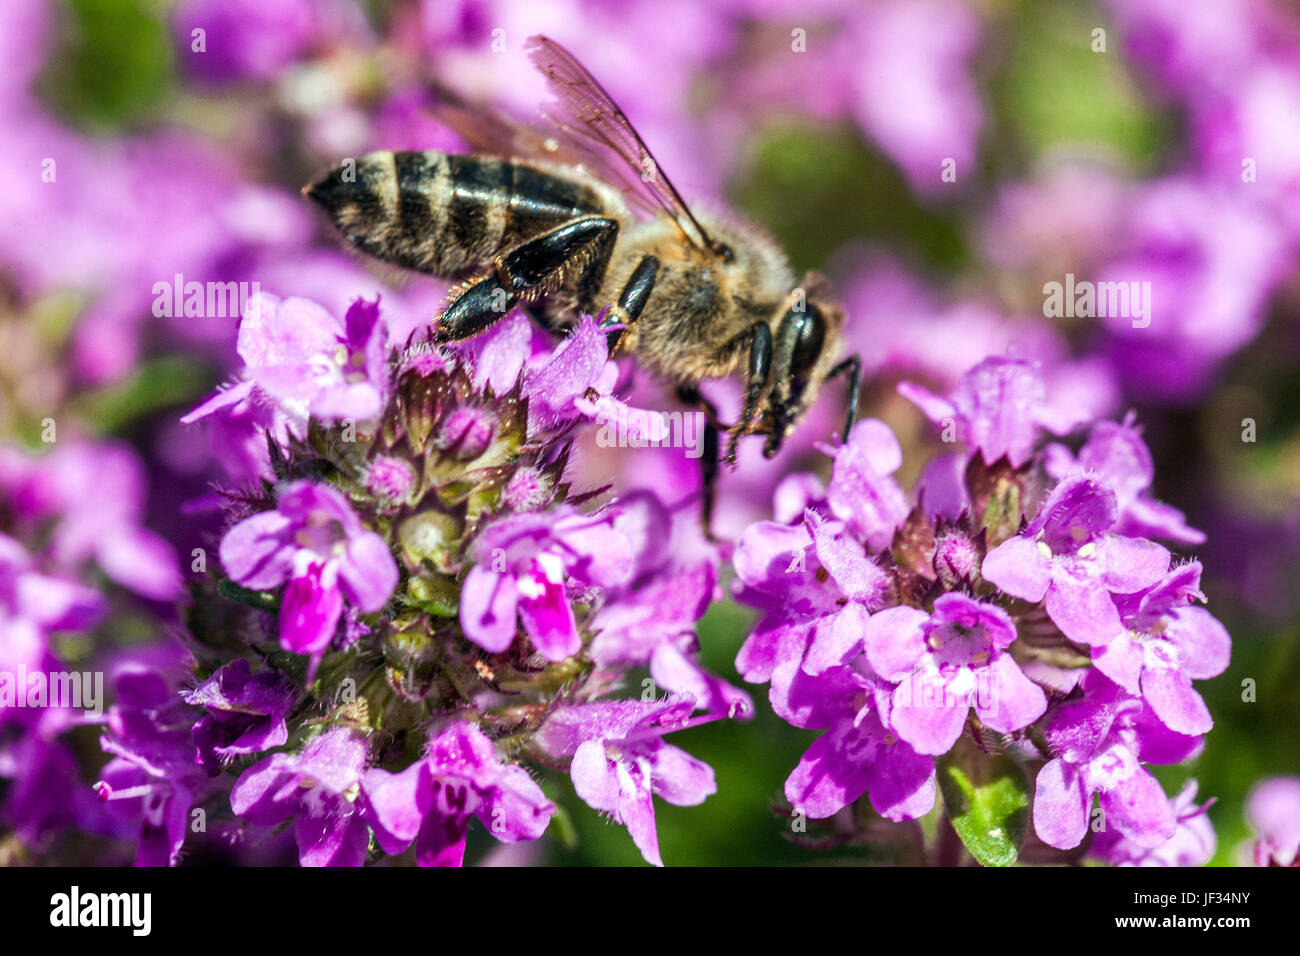 European Honey Bee Close-up bee on flower, Thymus pulegioides 'Kurt', Broad-leaved thyme, Lemon thyme, Honey bee pollination Stock Photo